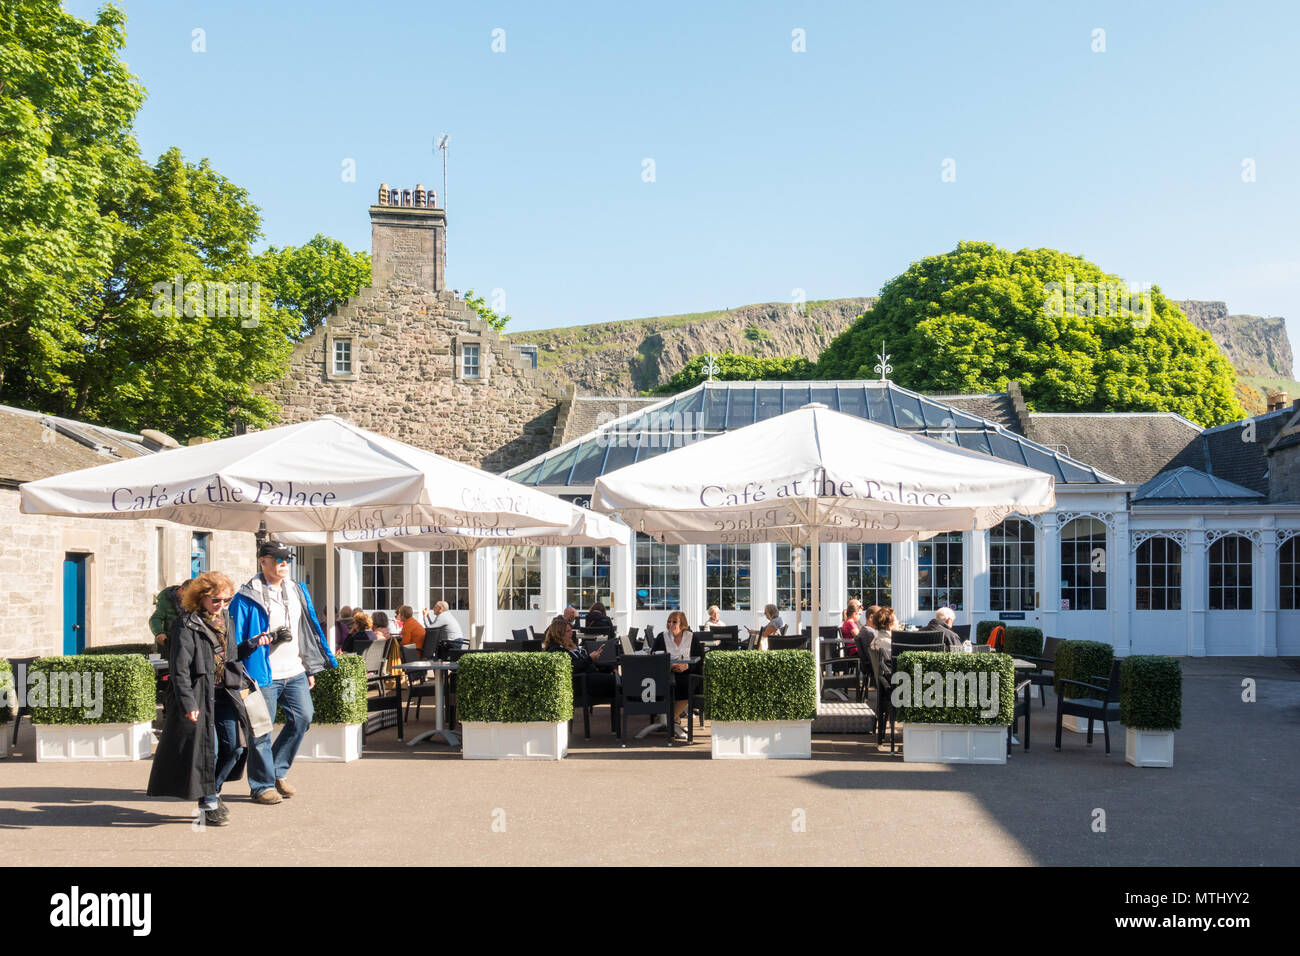 Holyrood Palace cafe - Cafe at the Palace, Mews Courtyard, Canongate, Edinburgh, Scotland, UK, with Salisbury Crags behind Stock Photo